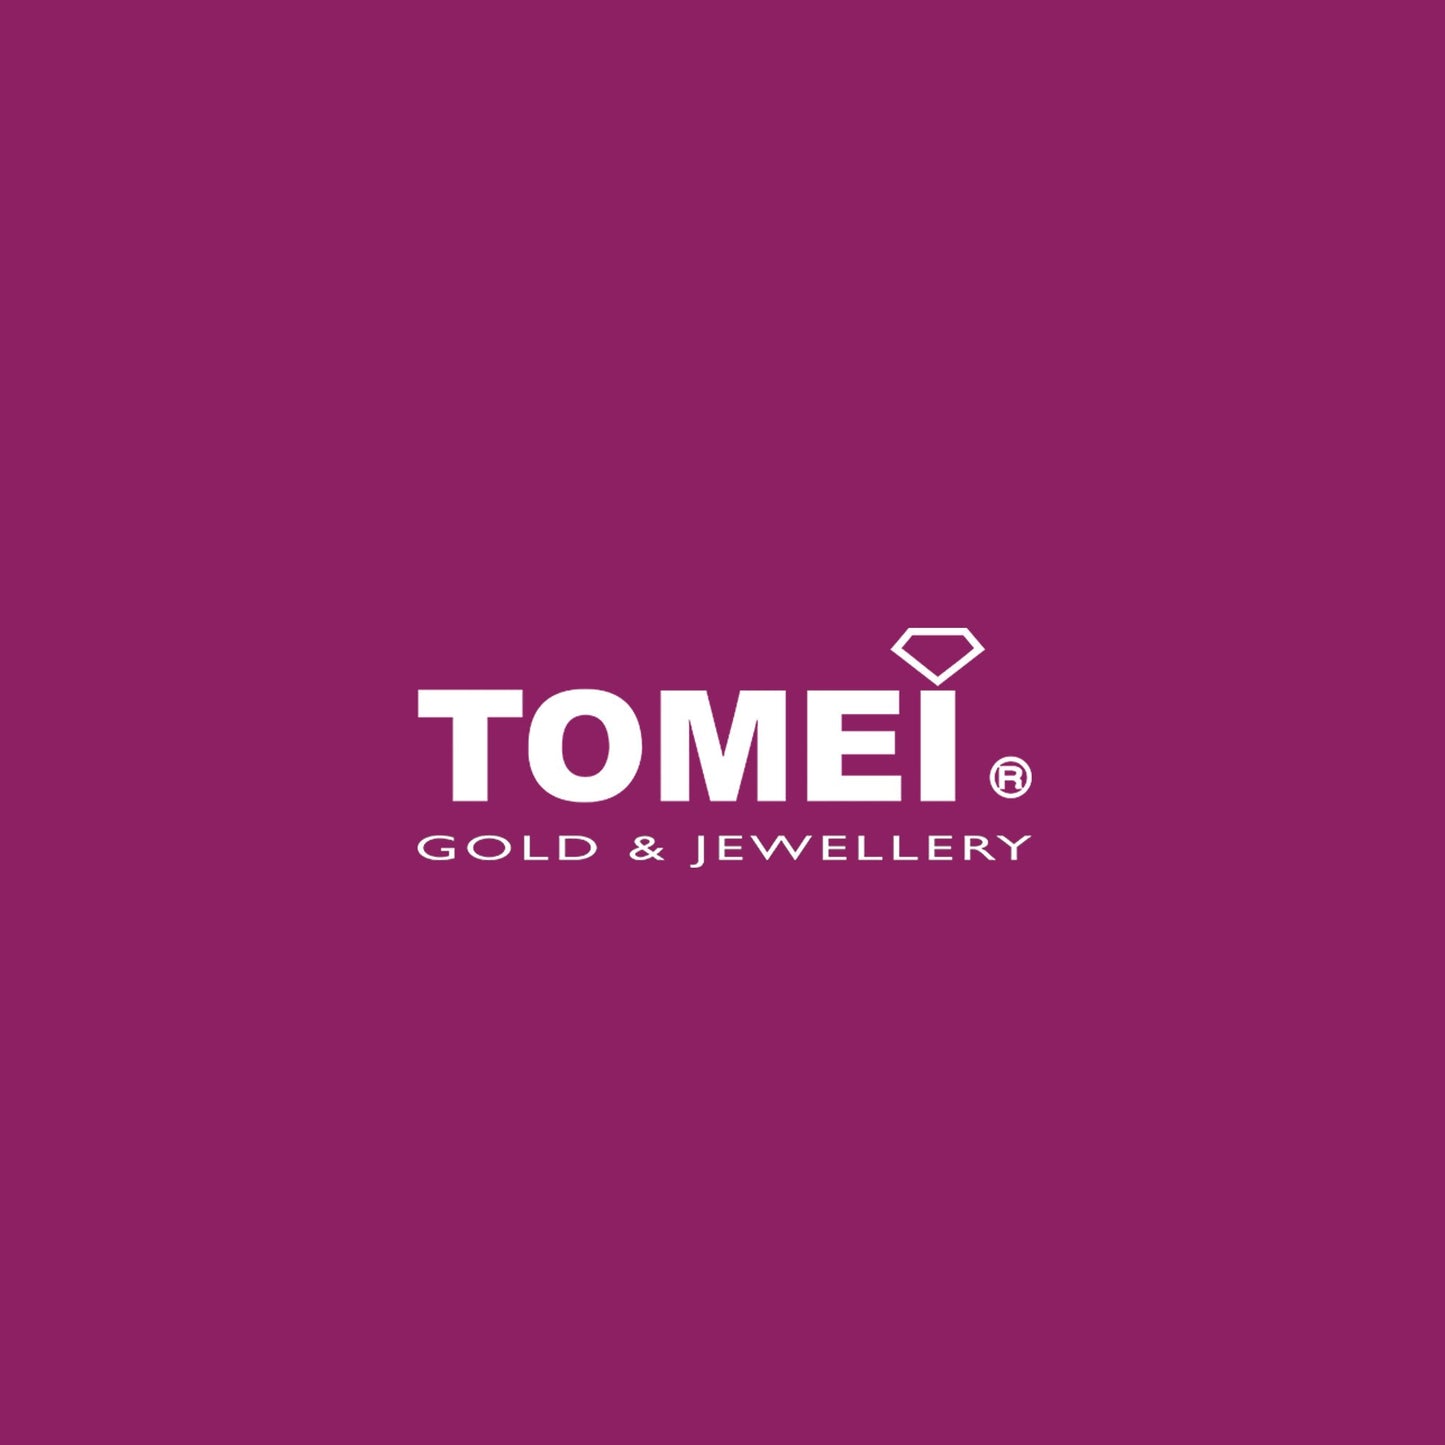 TOMEI Diamond Earrings, White Gold 375 (E1238)